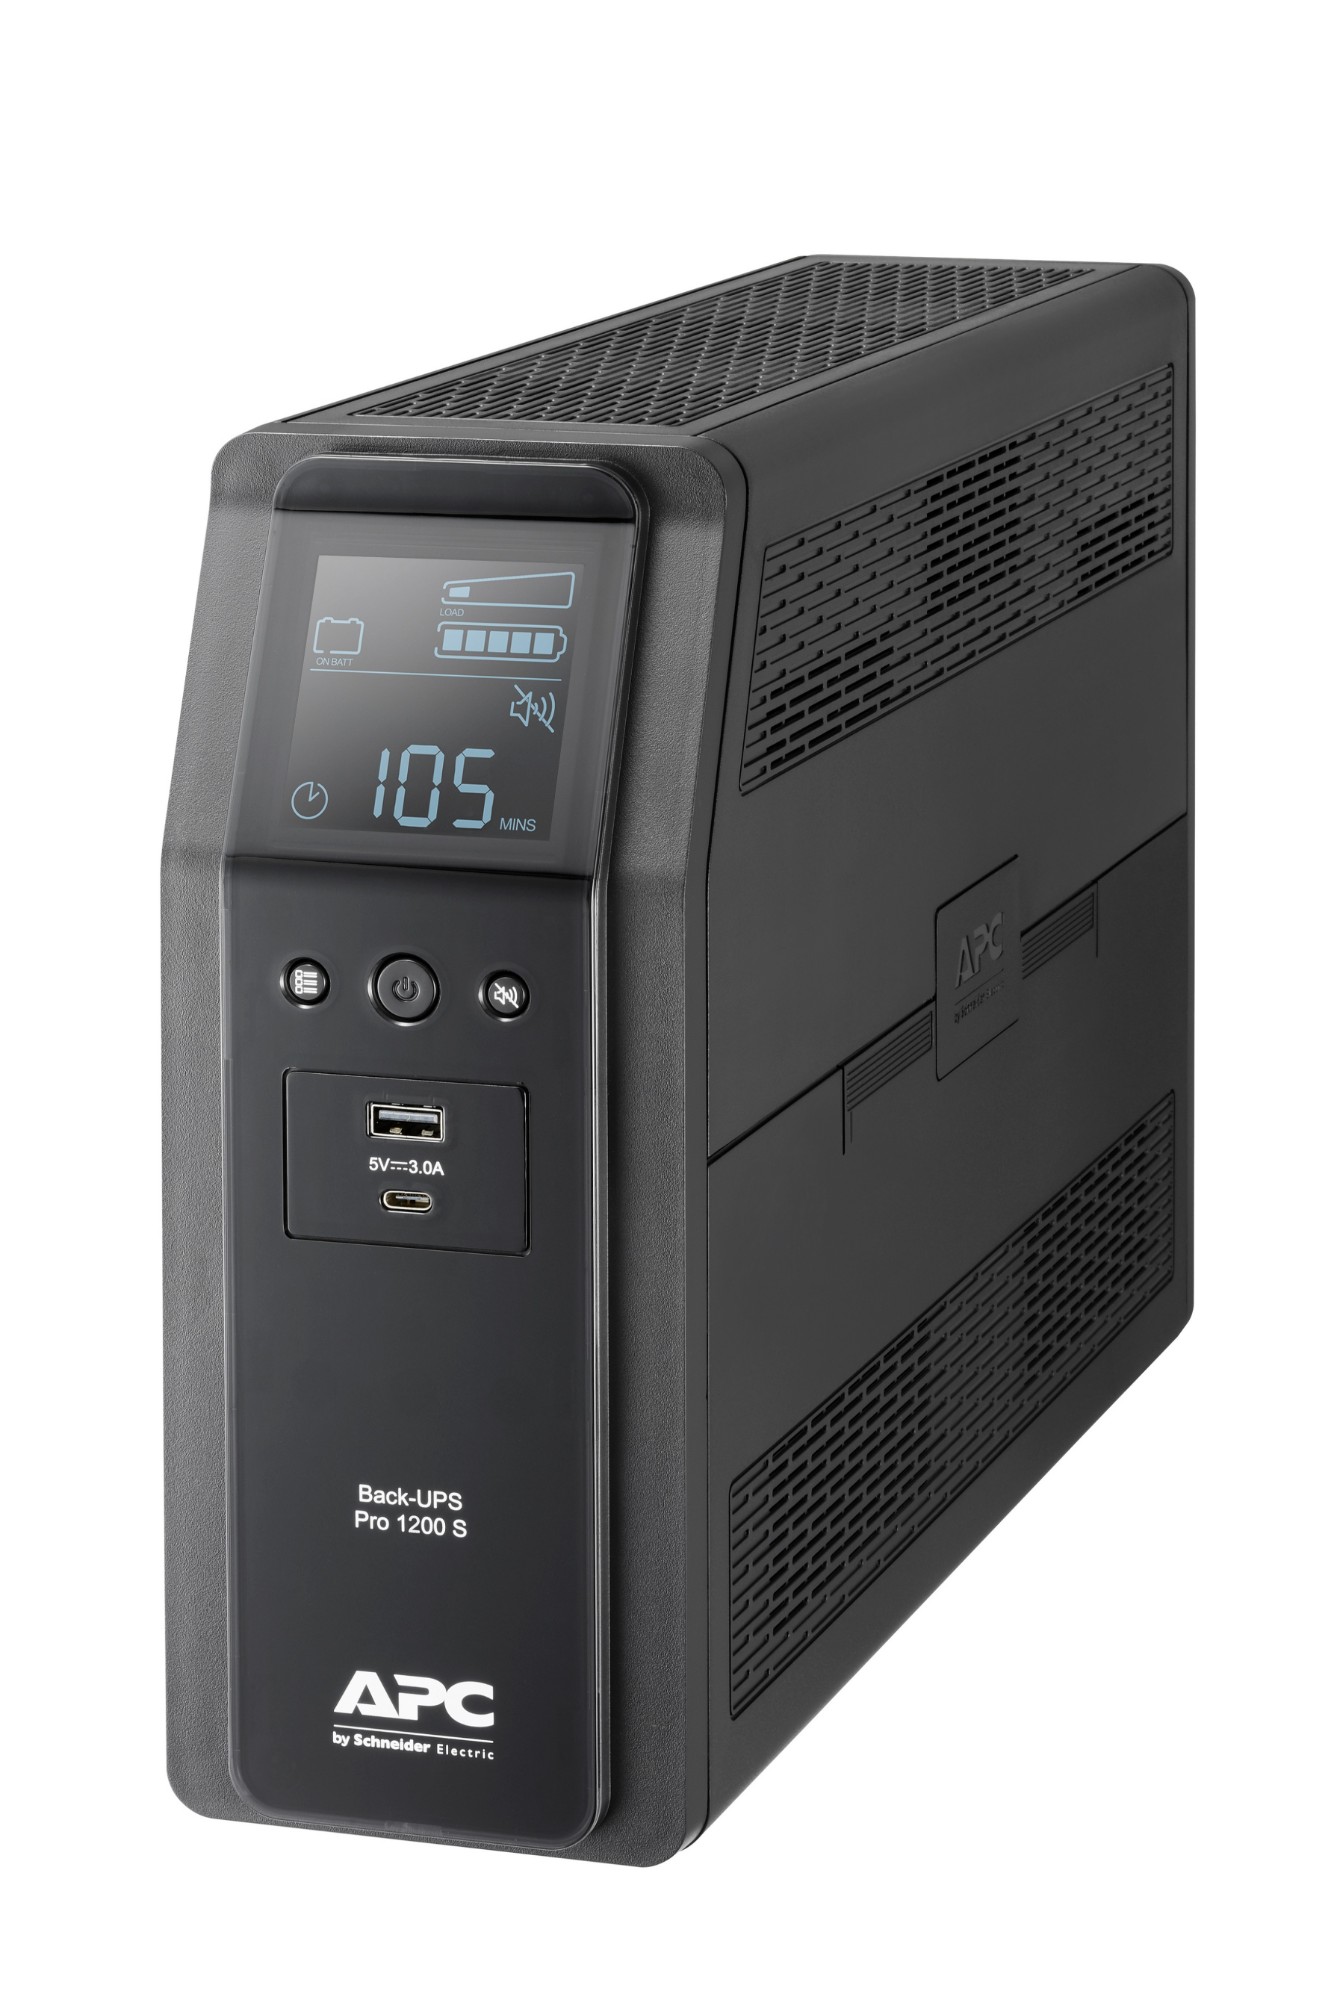 APC BACK UPS PRO BR 1200VA uninterruptible power supply (UPS) Line-Interactive 720 W 8 AC outlet(s)